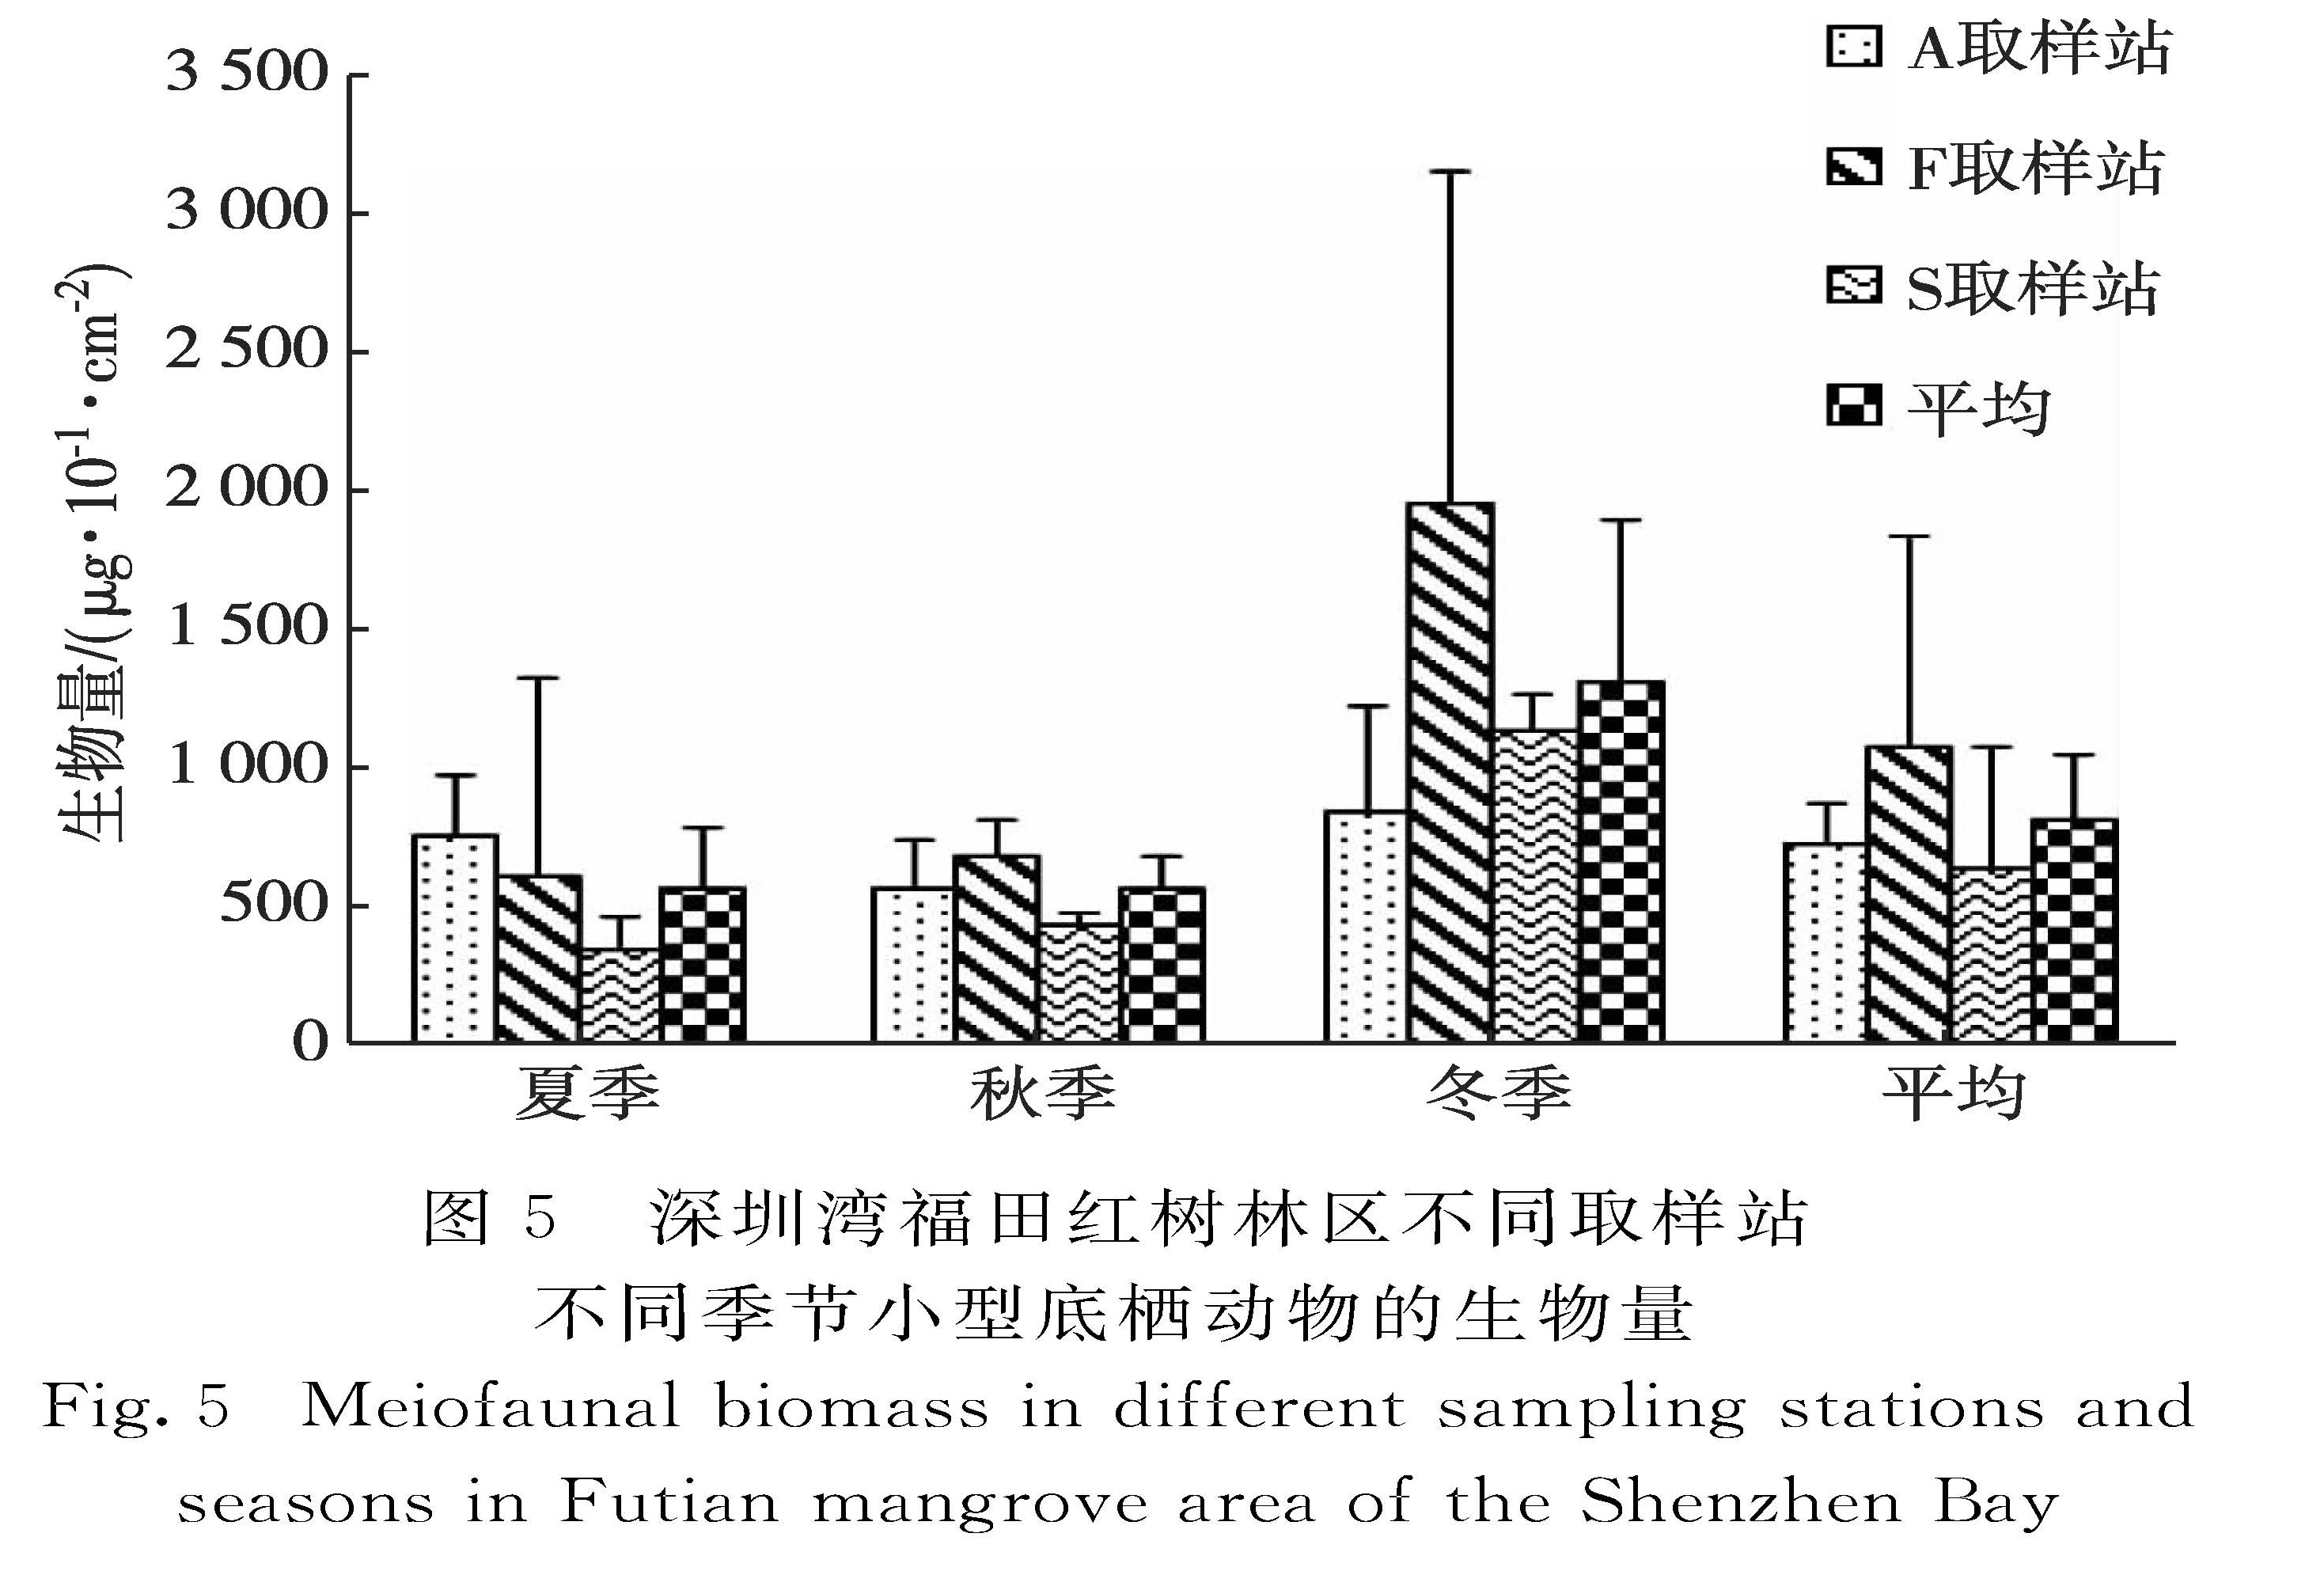 图5 深圳湾福田红树林区不同取样站不同季节小型底栖动物的生物量<br/>Fig.5 Meiofaunal biomass in different sampling stations and seasons in Futian mangrove area of the Shenzhen Bay